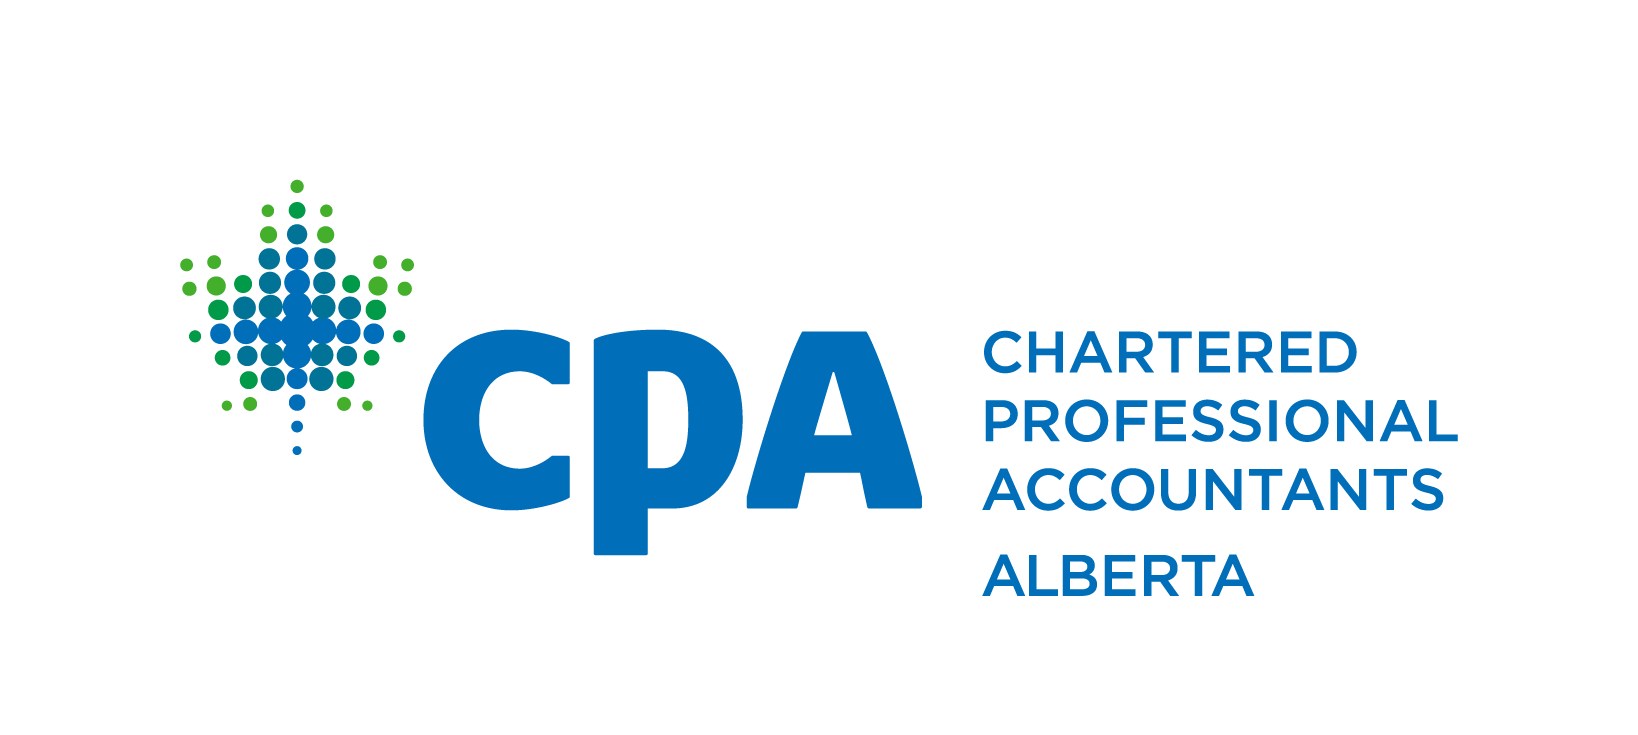 CPA Alberta pride logo